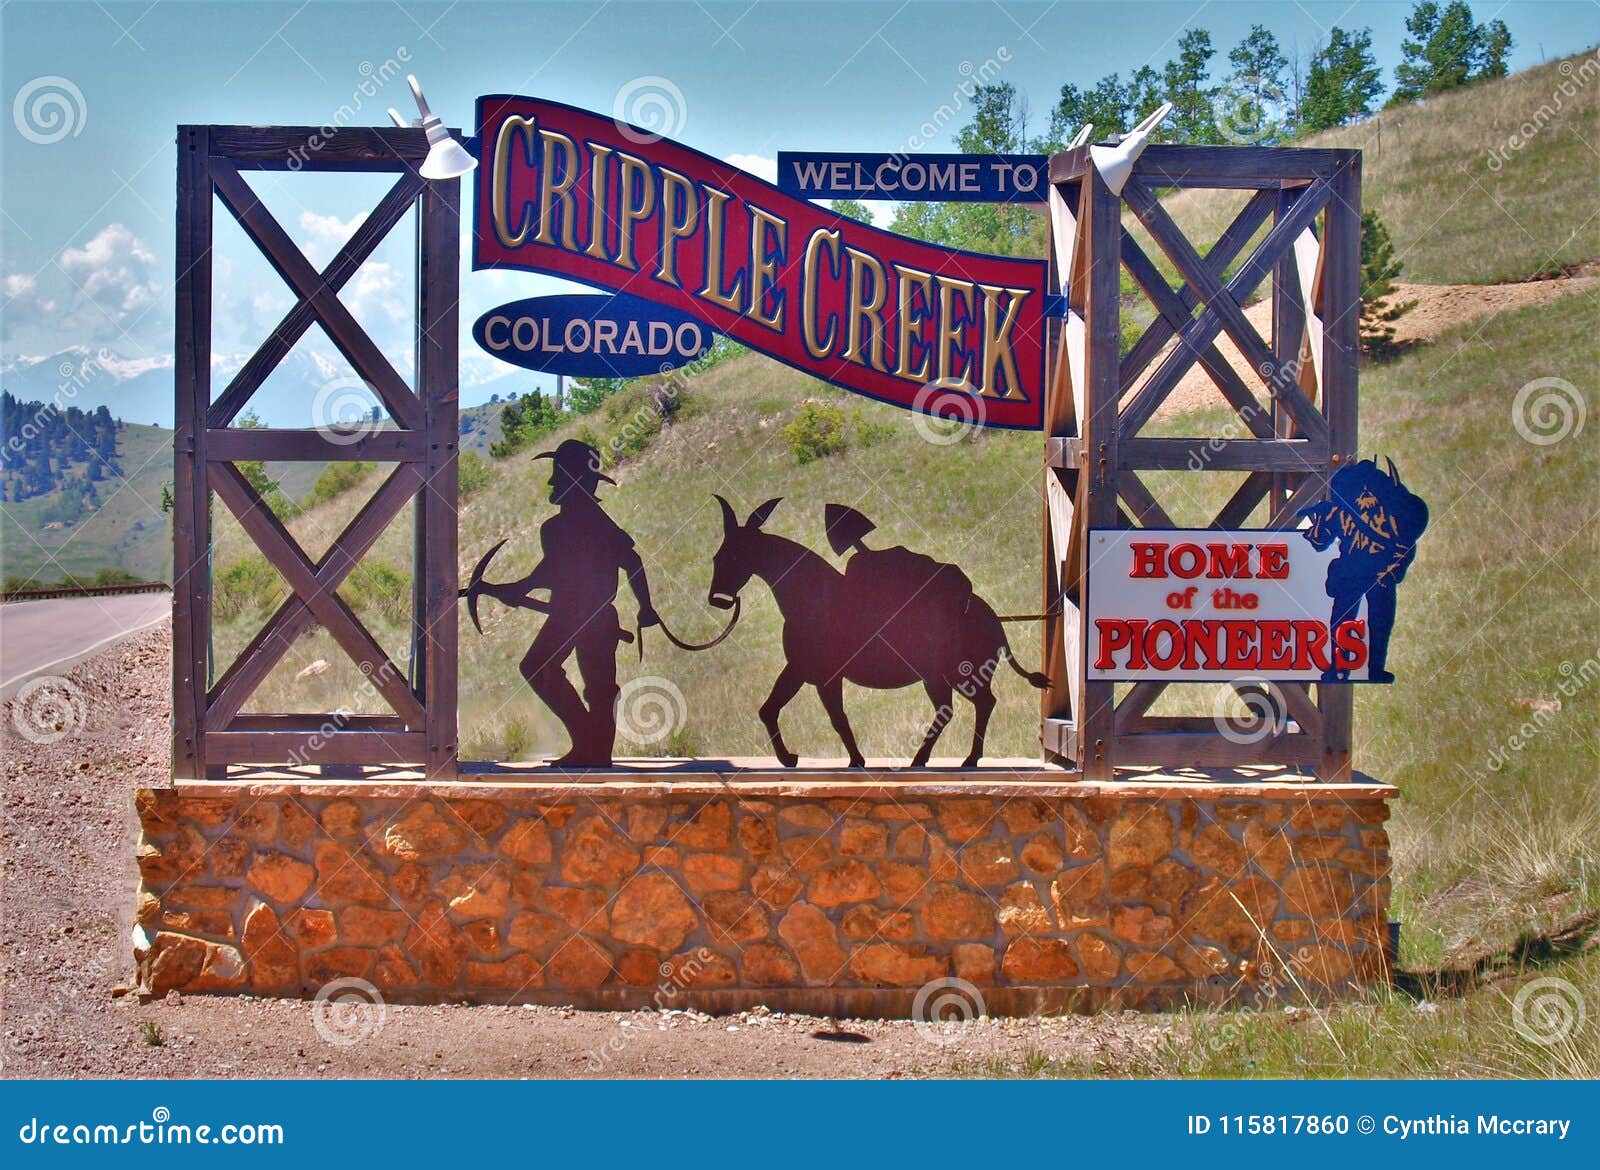 welcome sign in cripple creek colorado